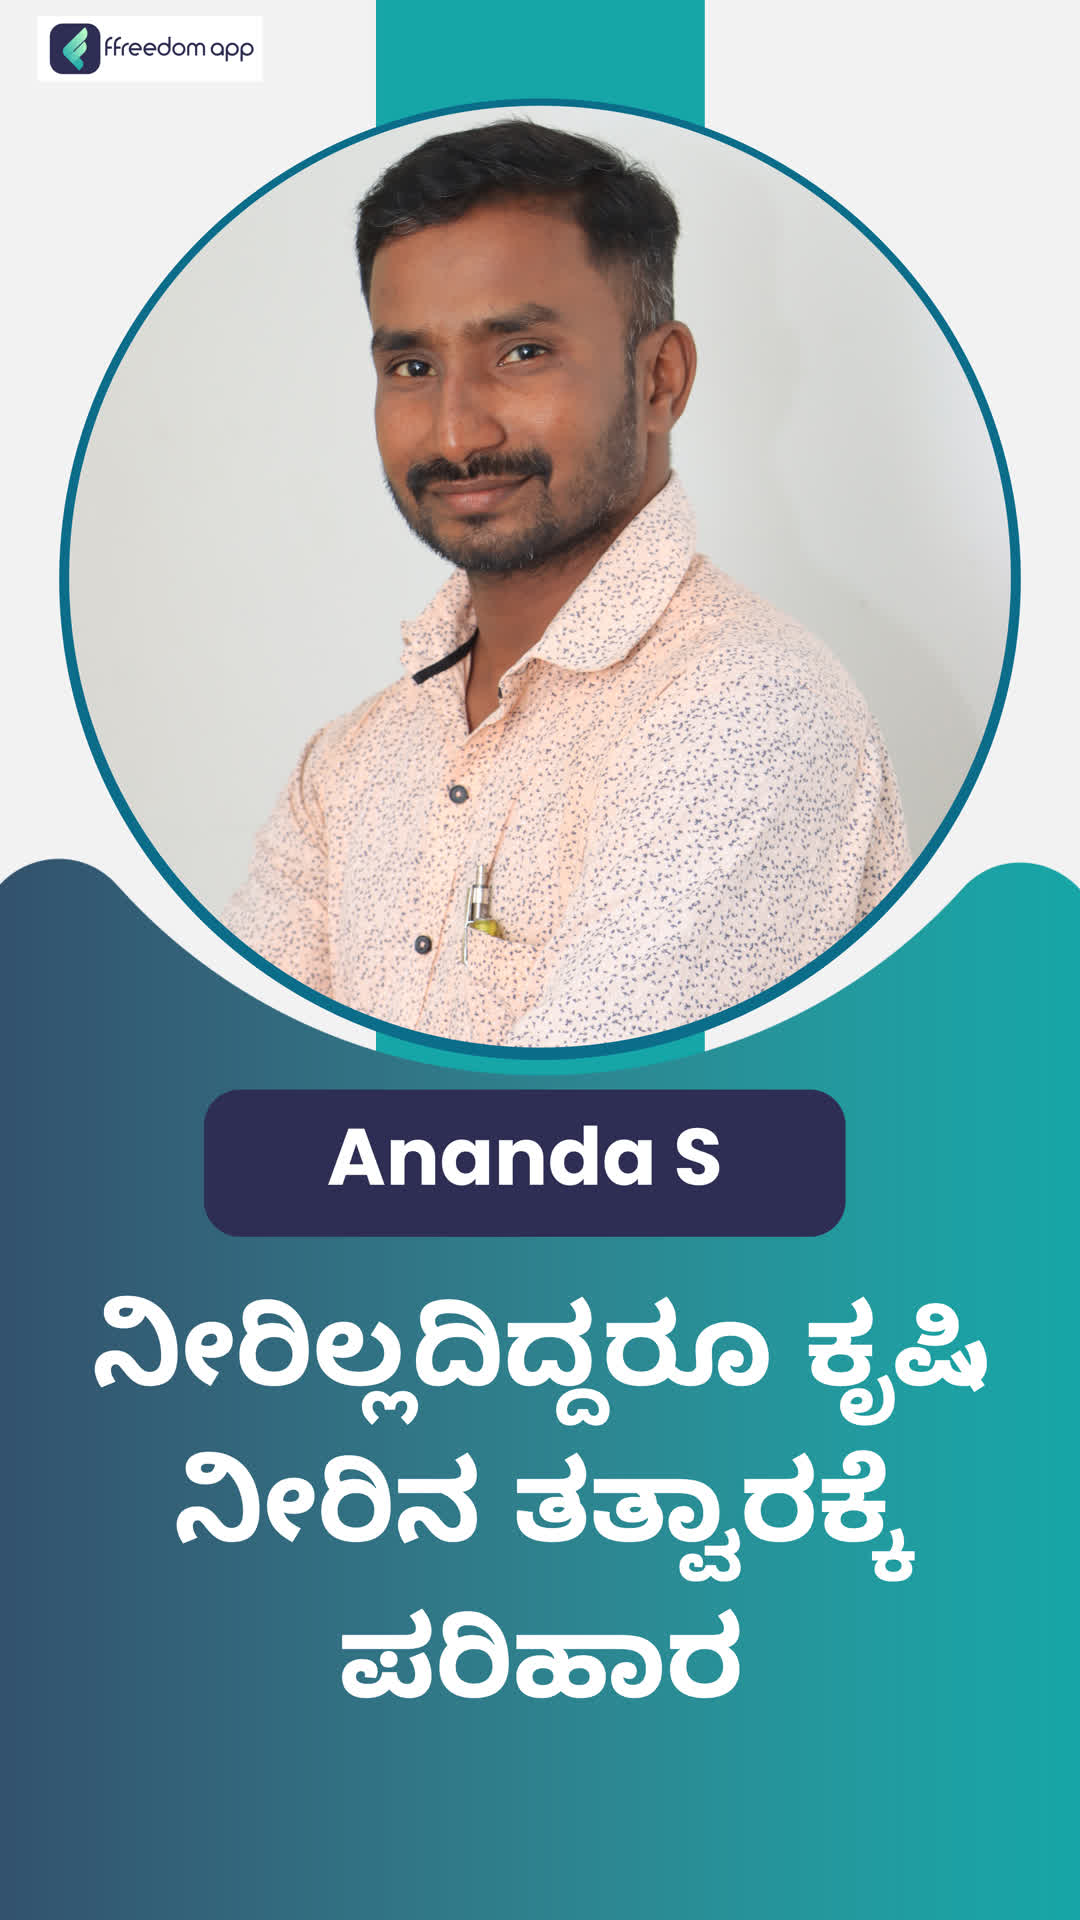 Ananda's Honest Review of ffreedom app - Bengaluru Rural ,Karnataka